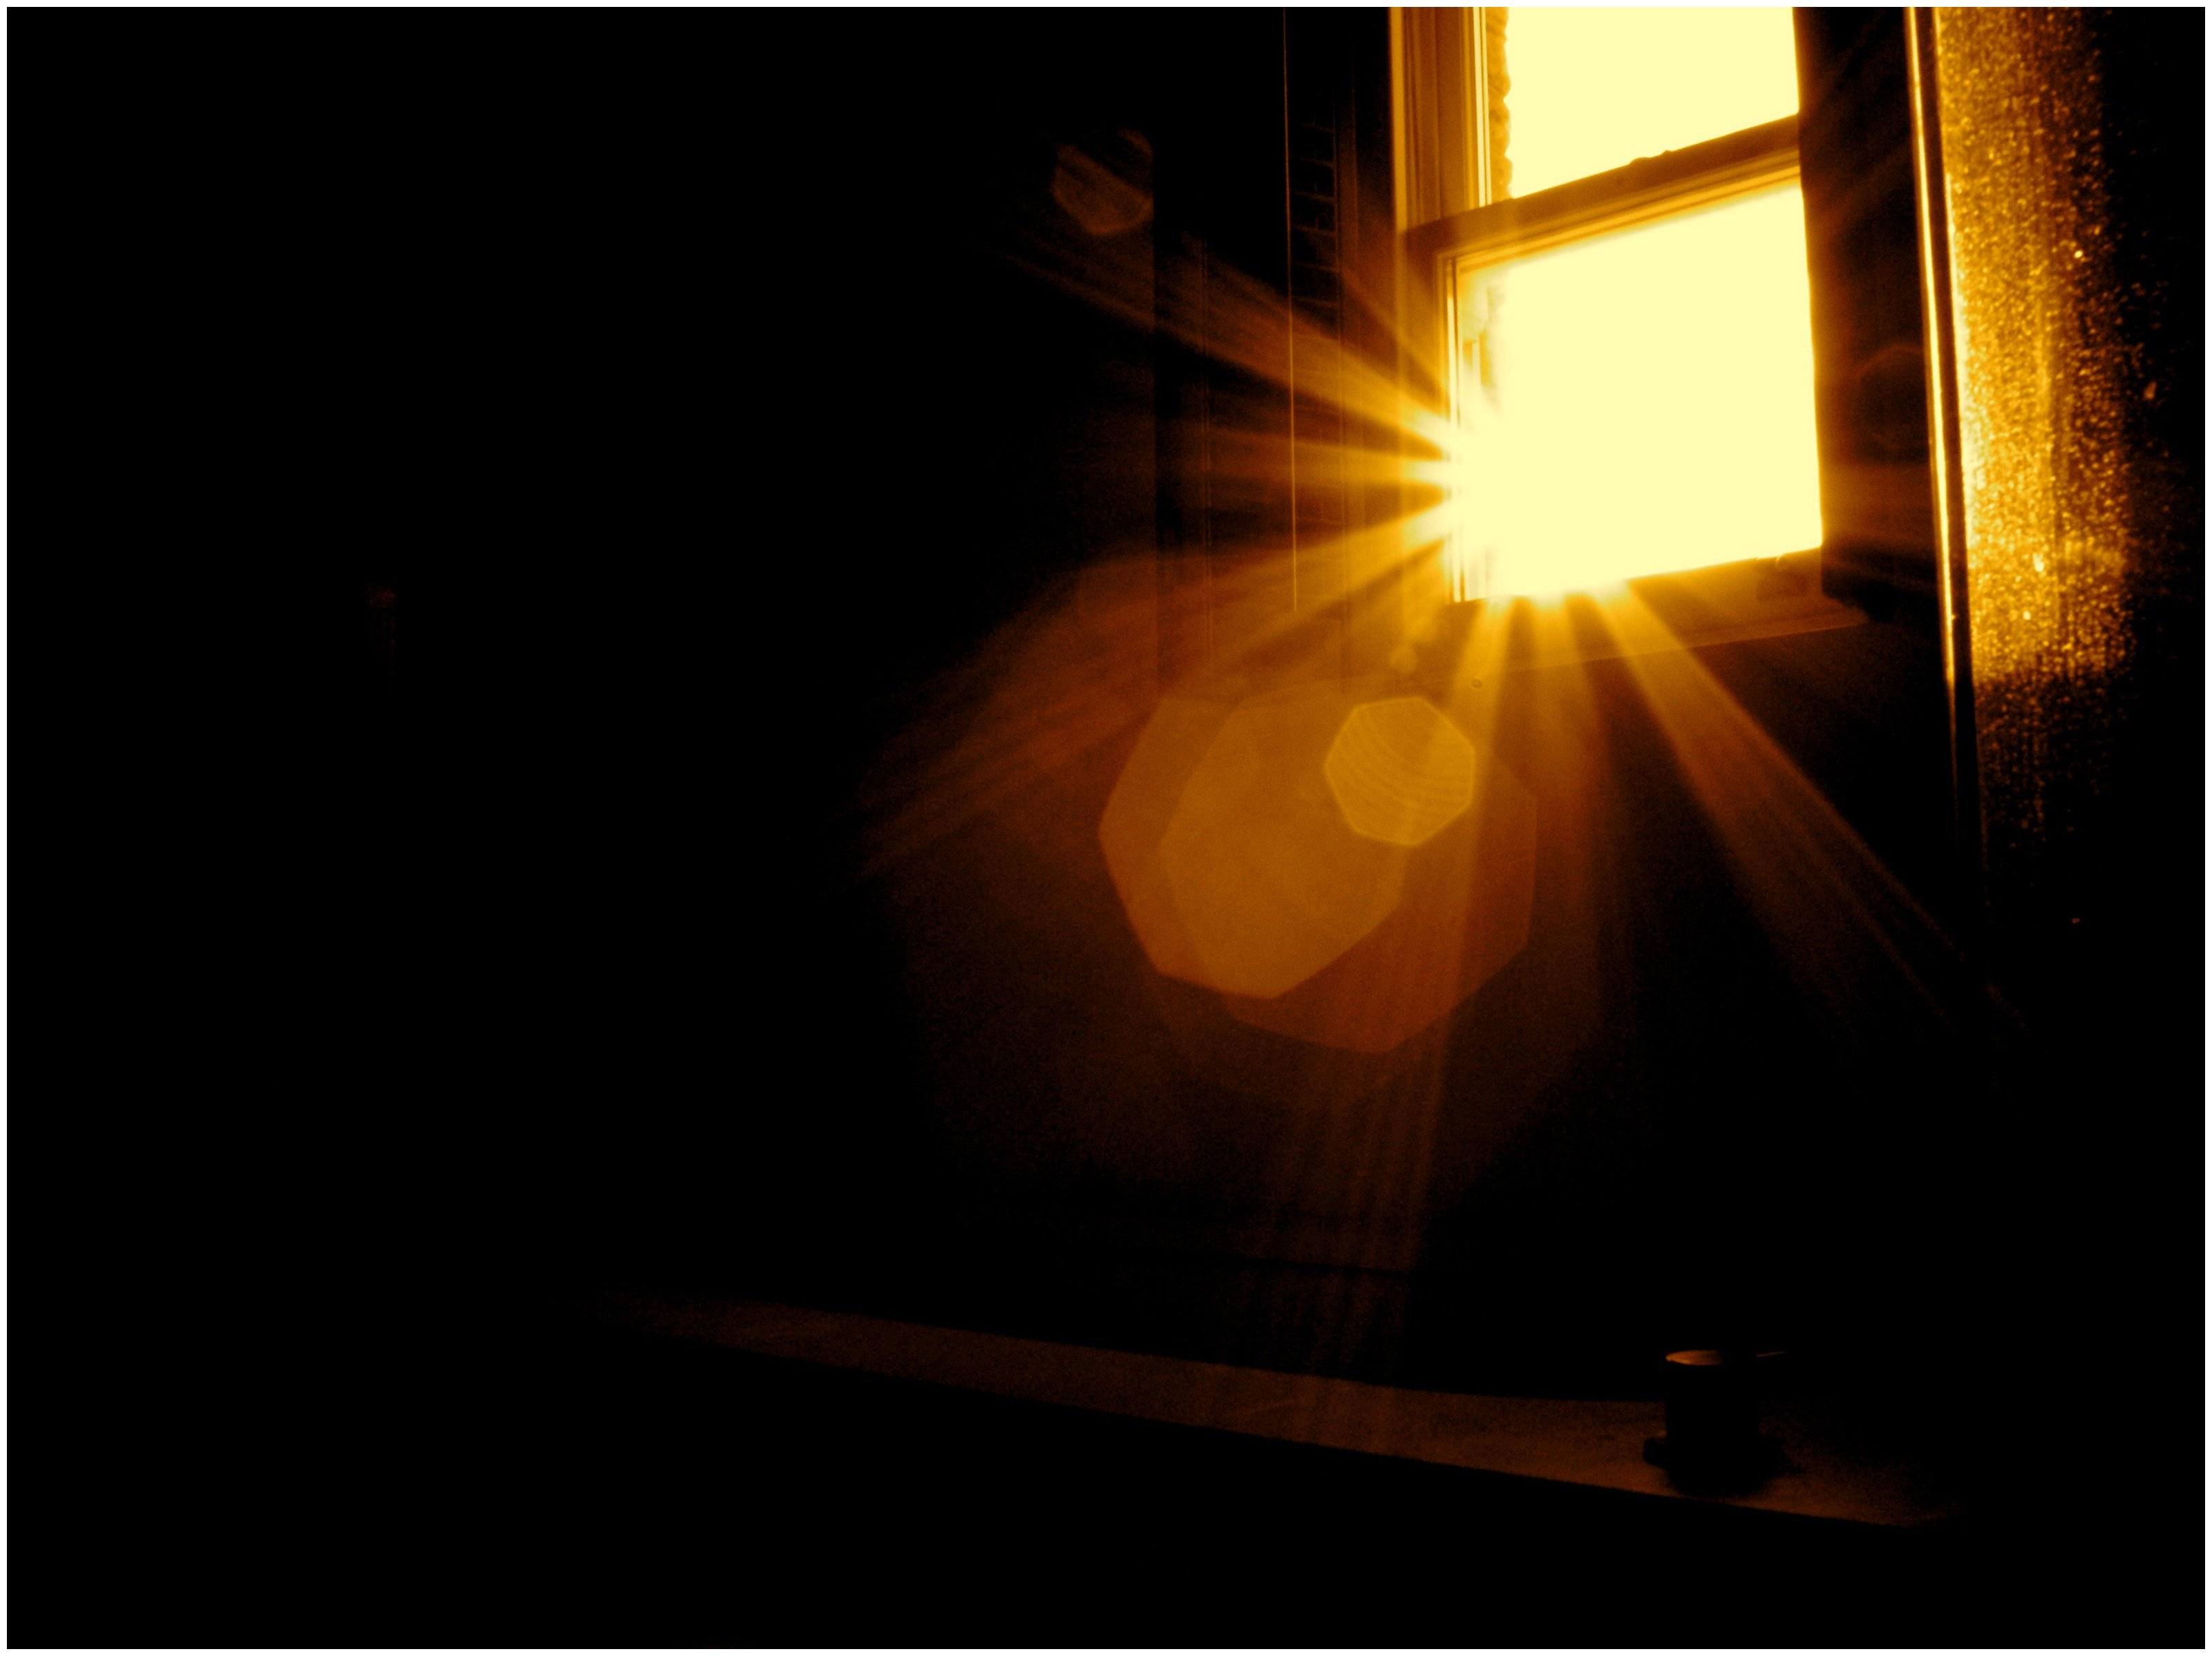 Душа в окне свет. Свет из окна. Луч солнца в окне. Солнечные лучи в окне. Солнечные лучи в комнате.